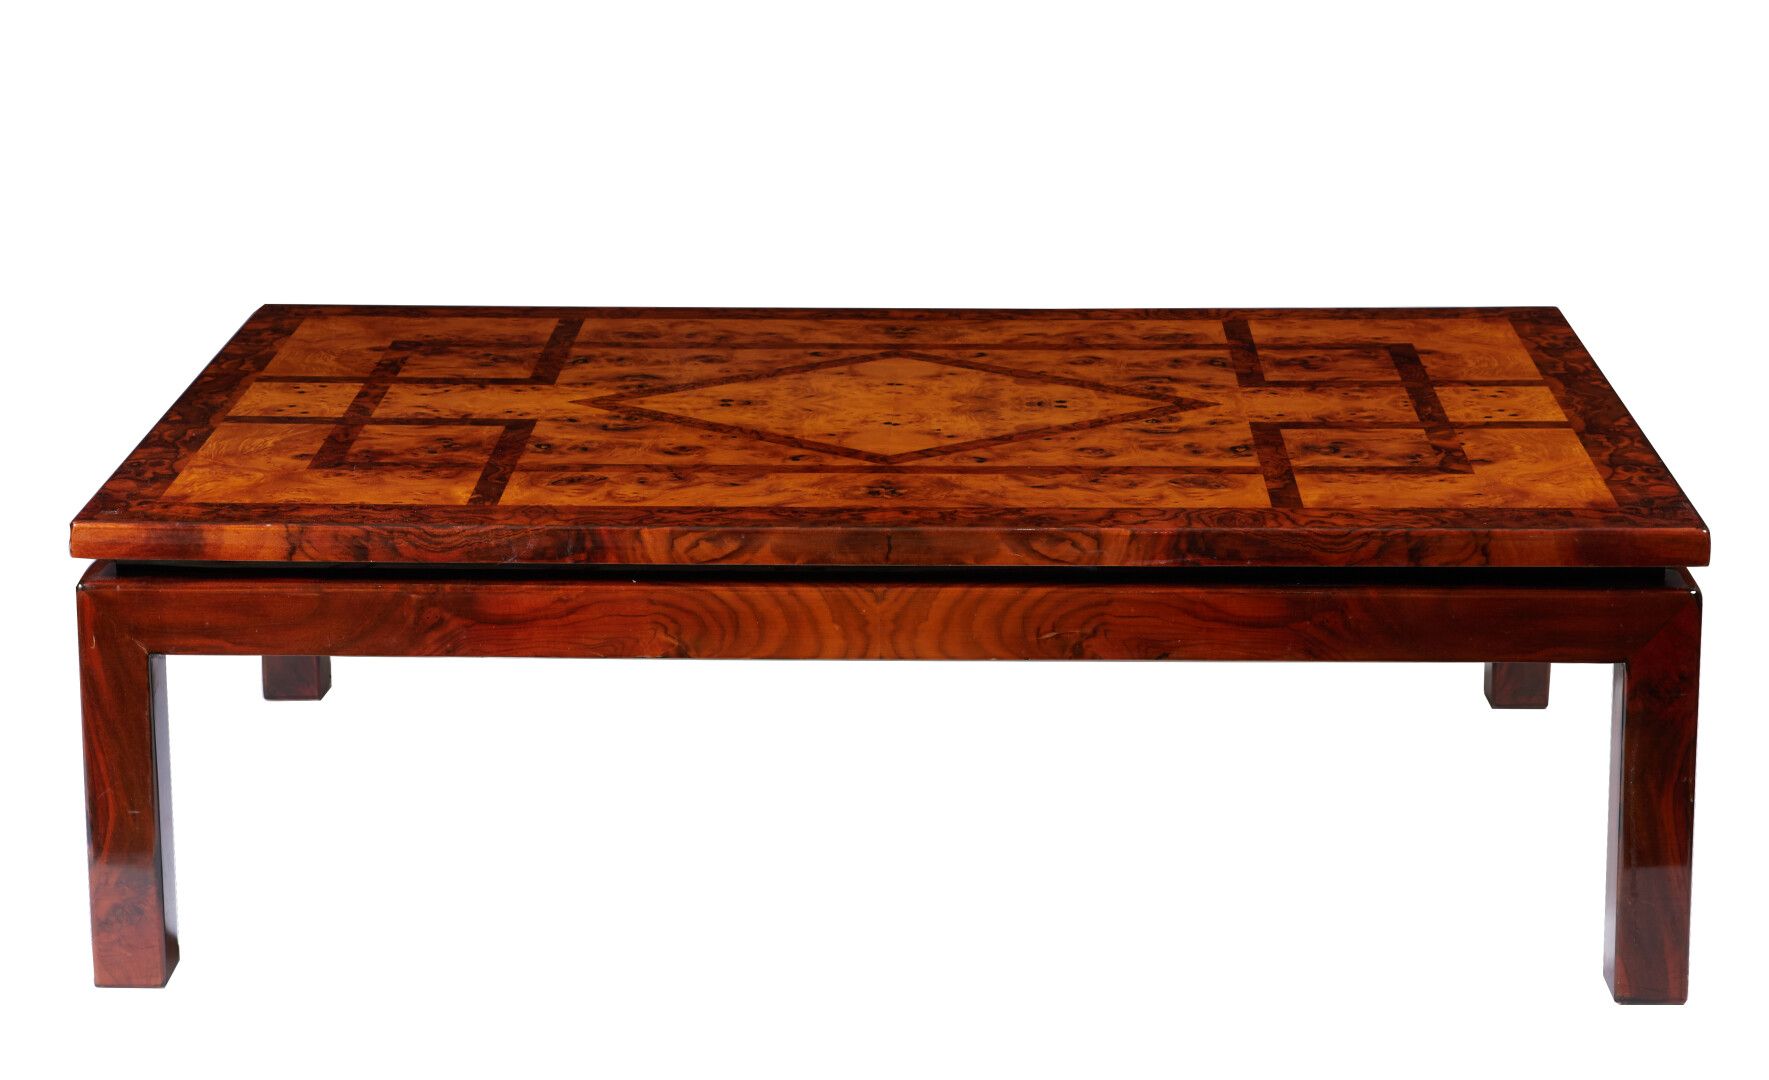 Null 长方形咖啡桌，采用毛刺胡桃木饰面，嵌有大圆角。

约1975年。

41 x 130 x 80厘米